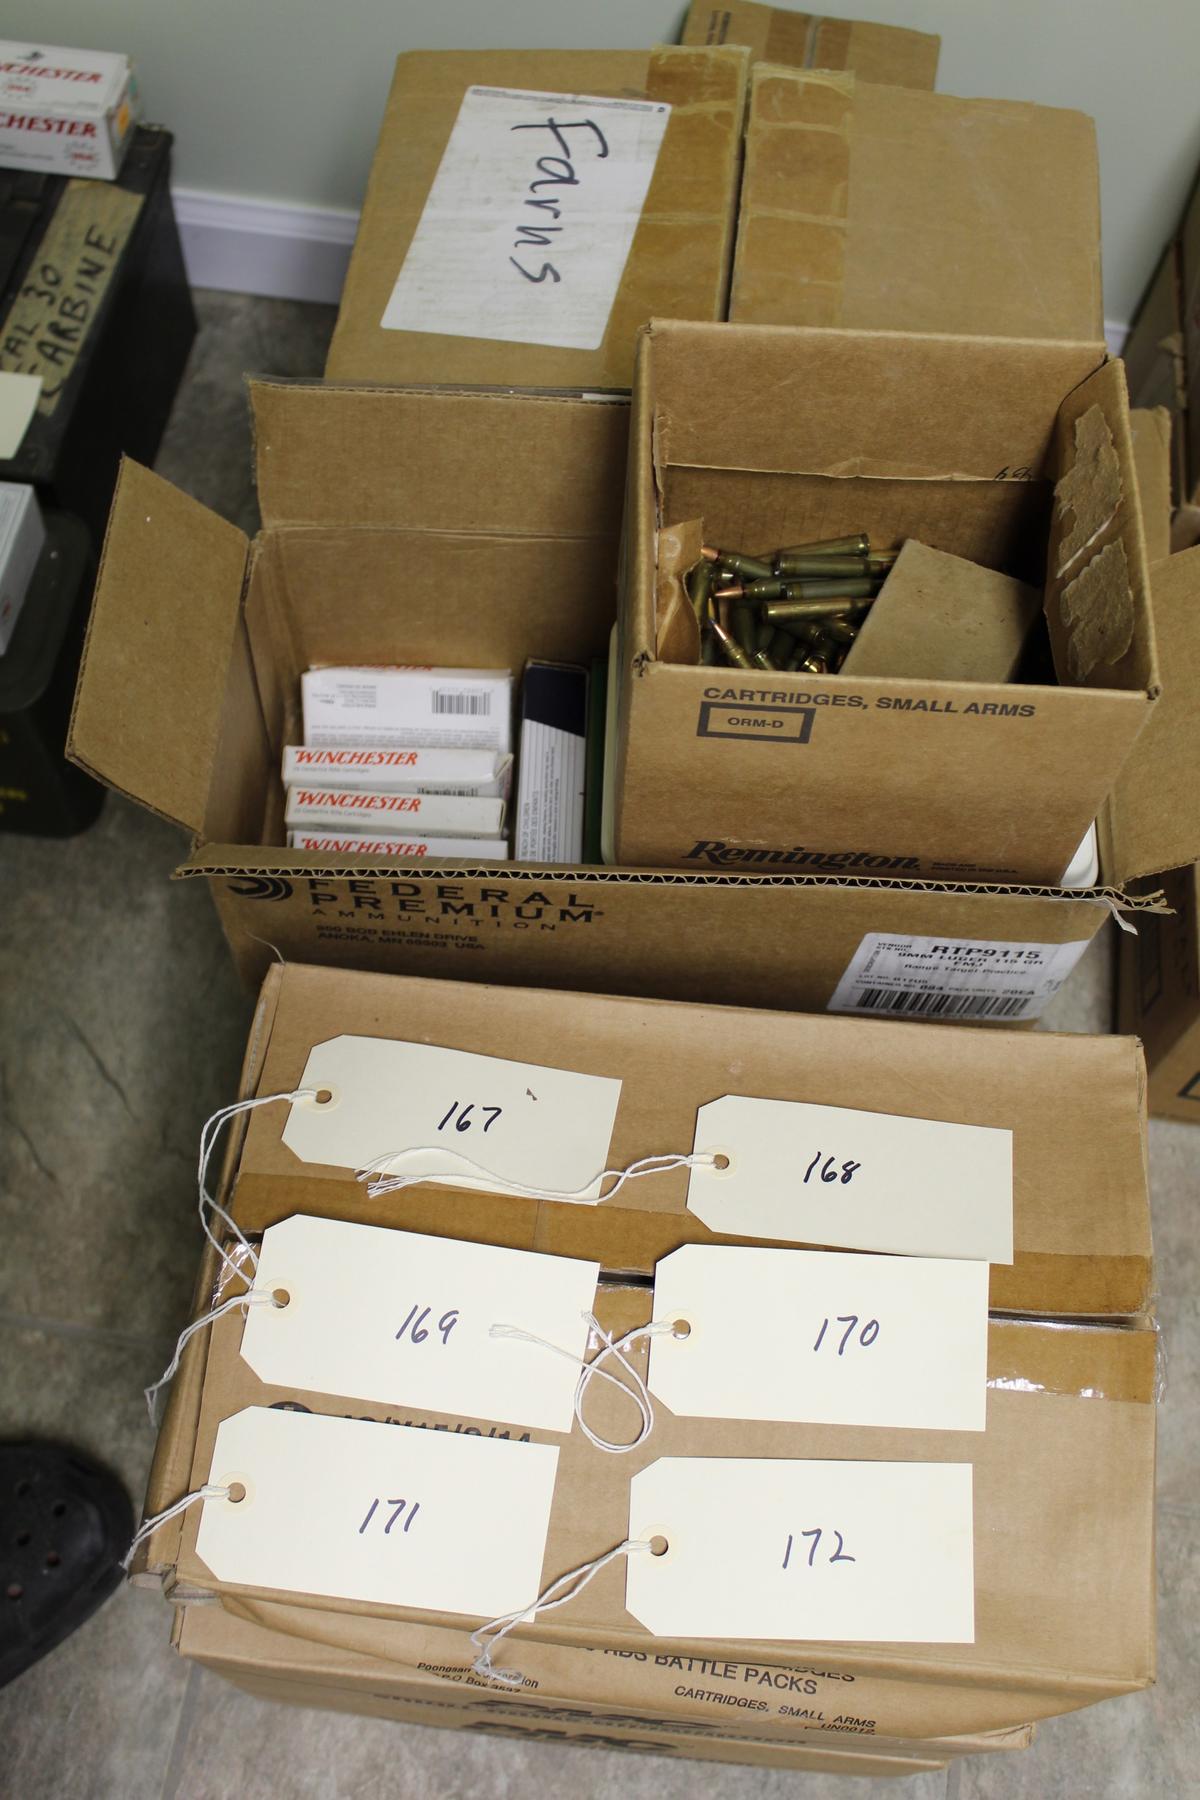 1,310 rounds total 223 Remington  43 boxes (50) PMC FMJ, 12 boxes (20) mixe